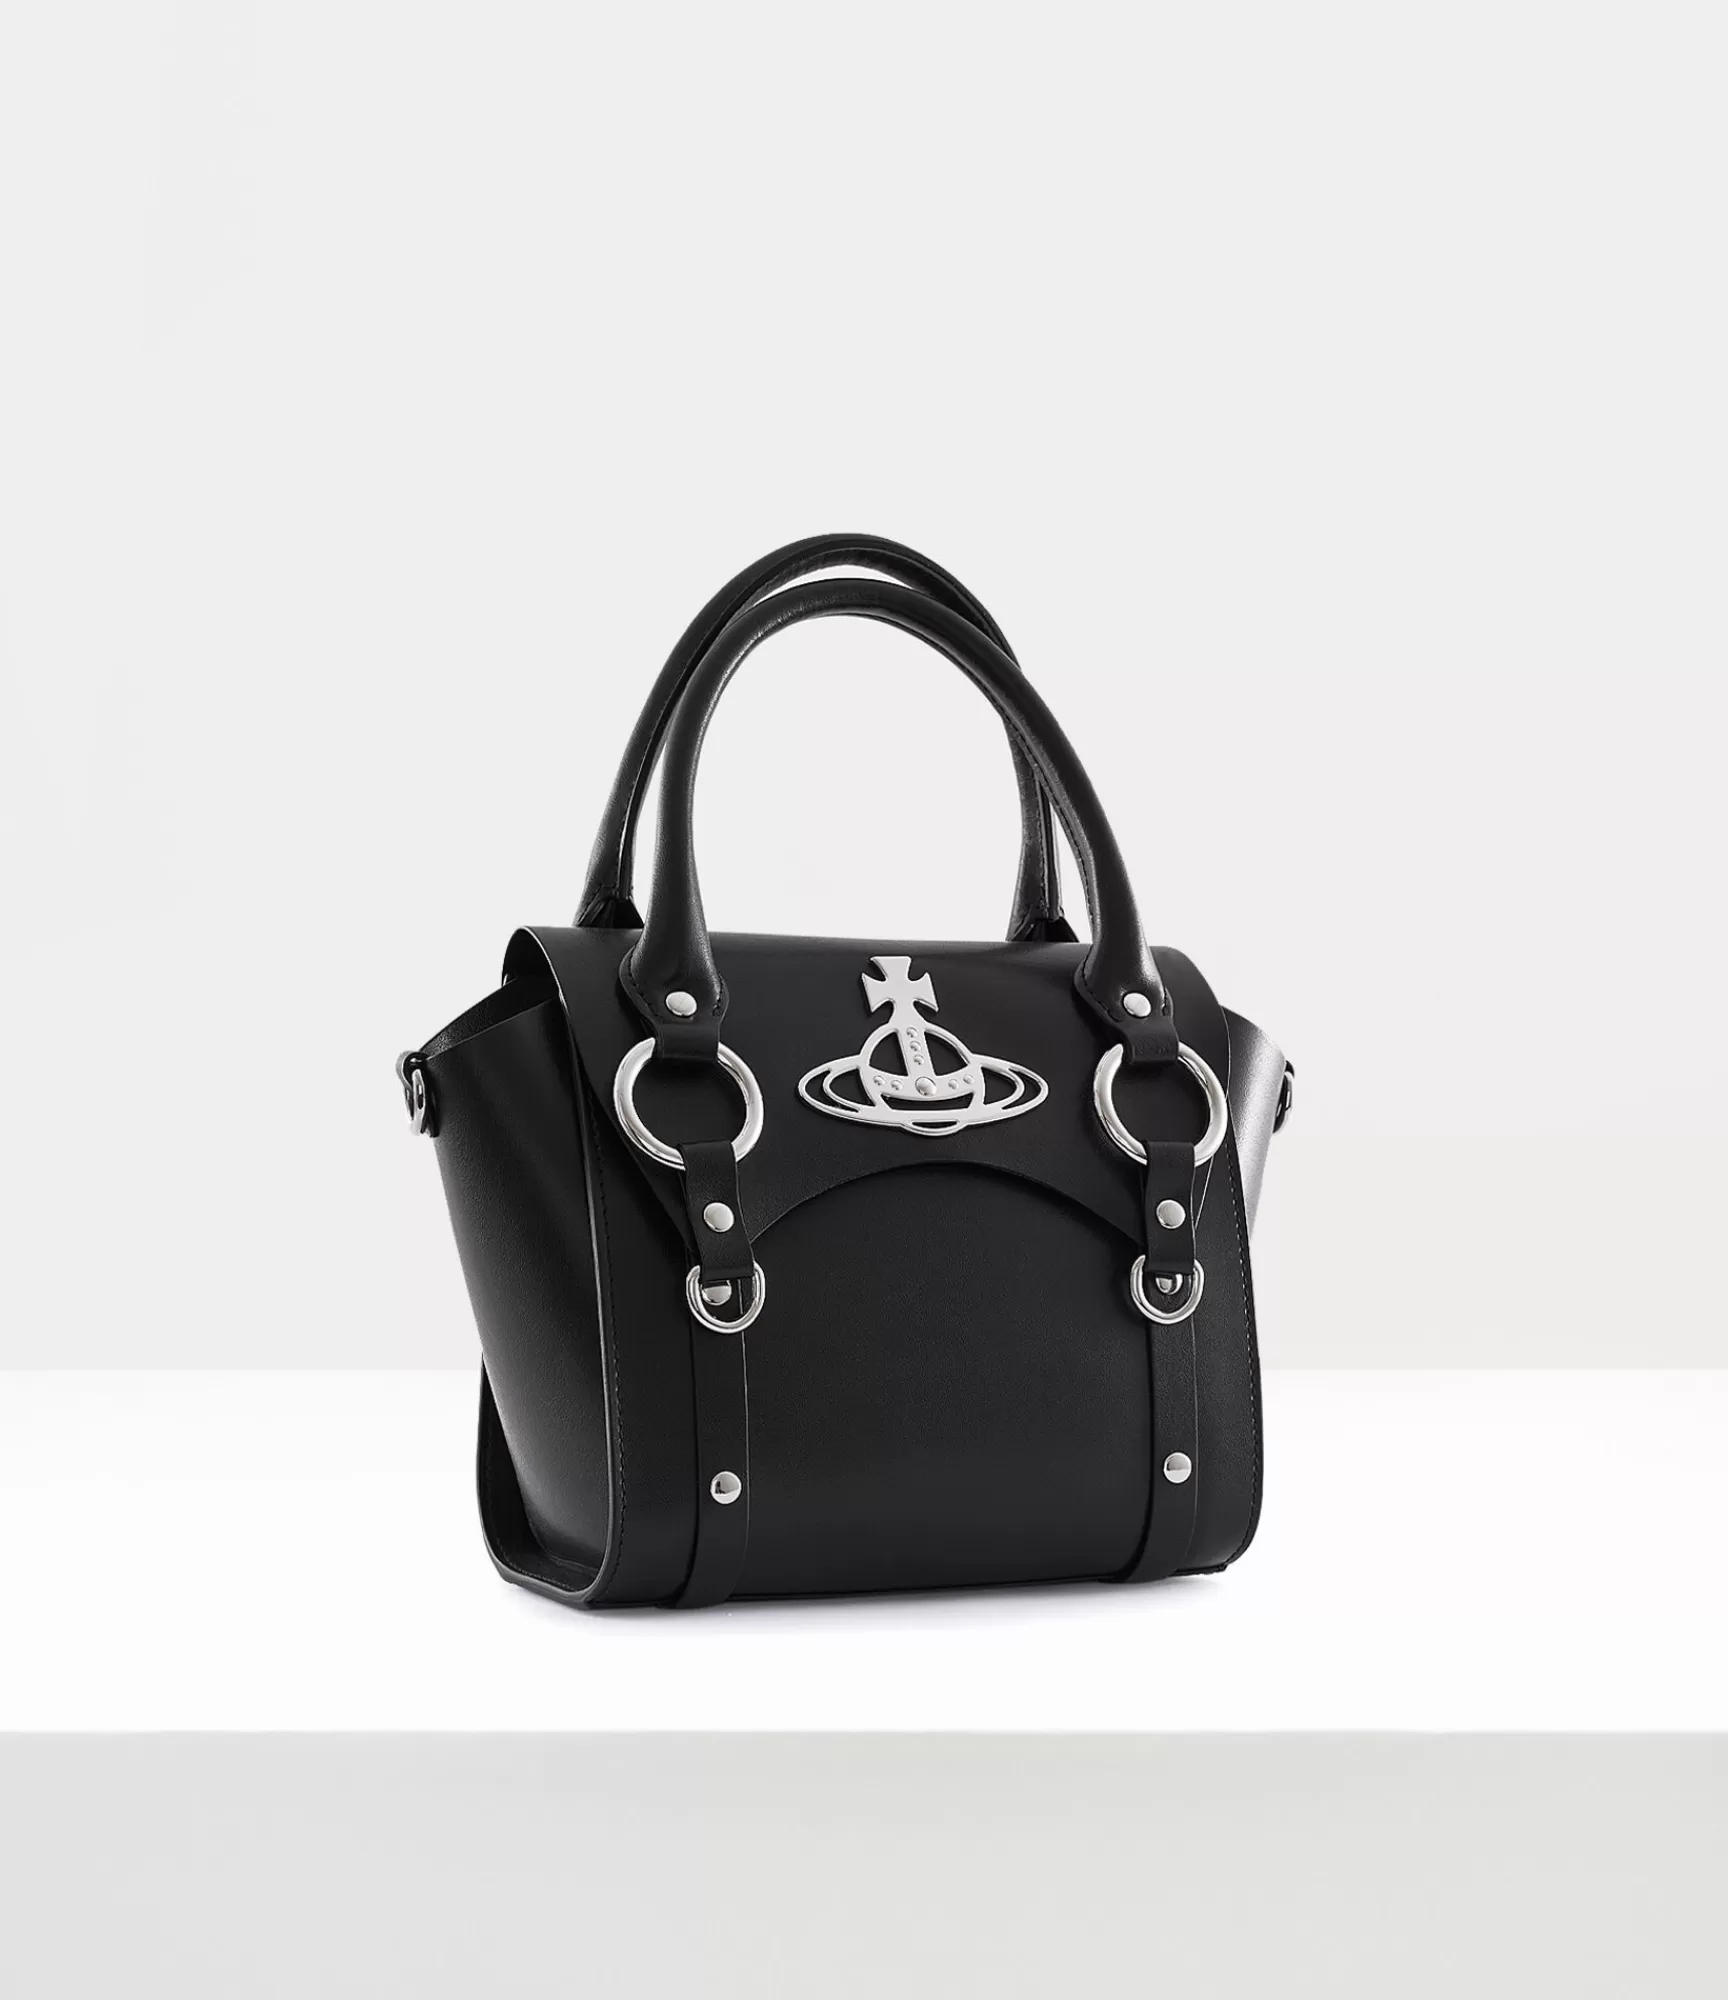 Vivienne Westwood Handbags*Small handbag Black